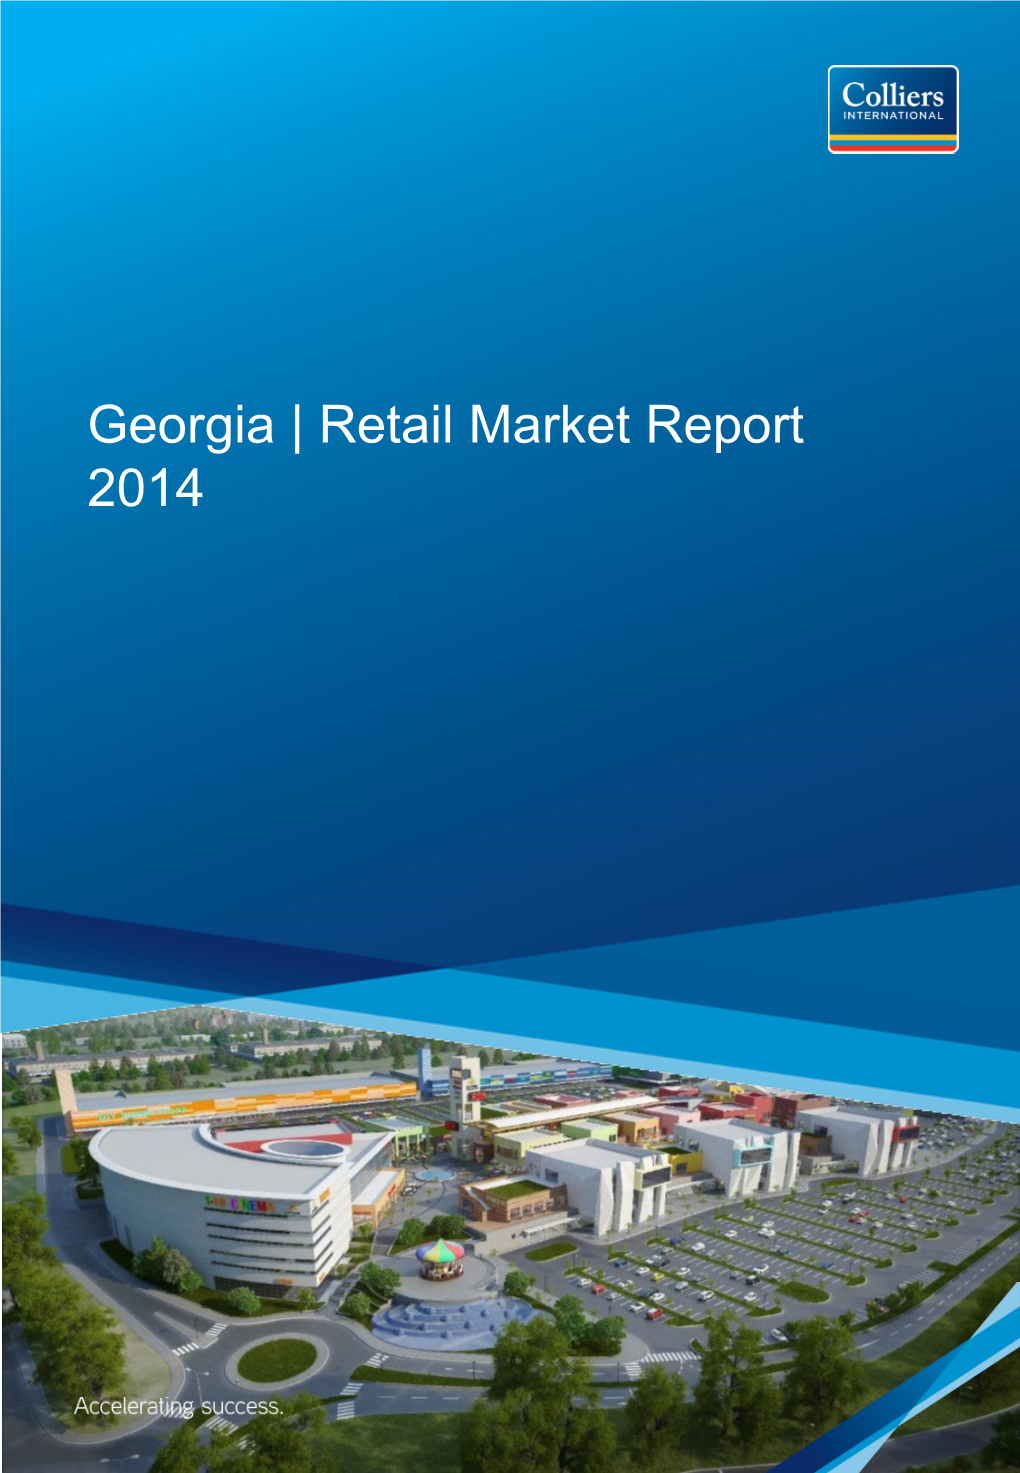 Georgia | Retail Market Report 2014 Contents